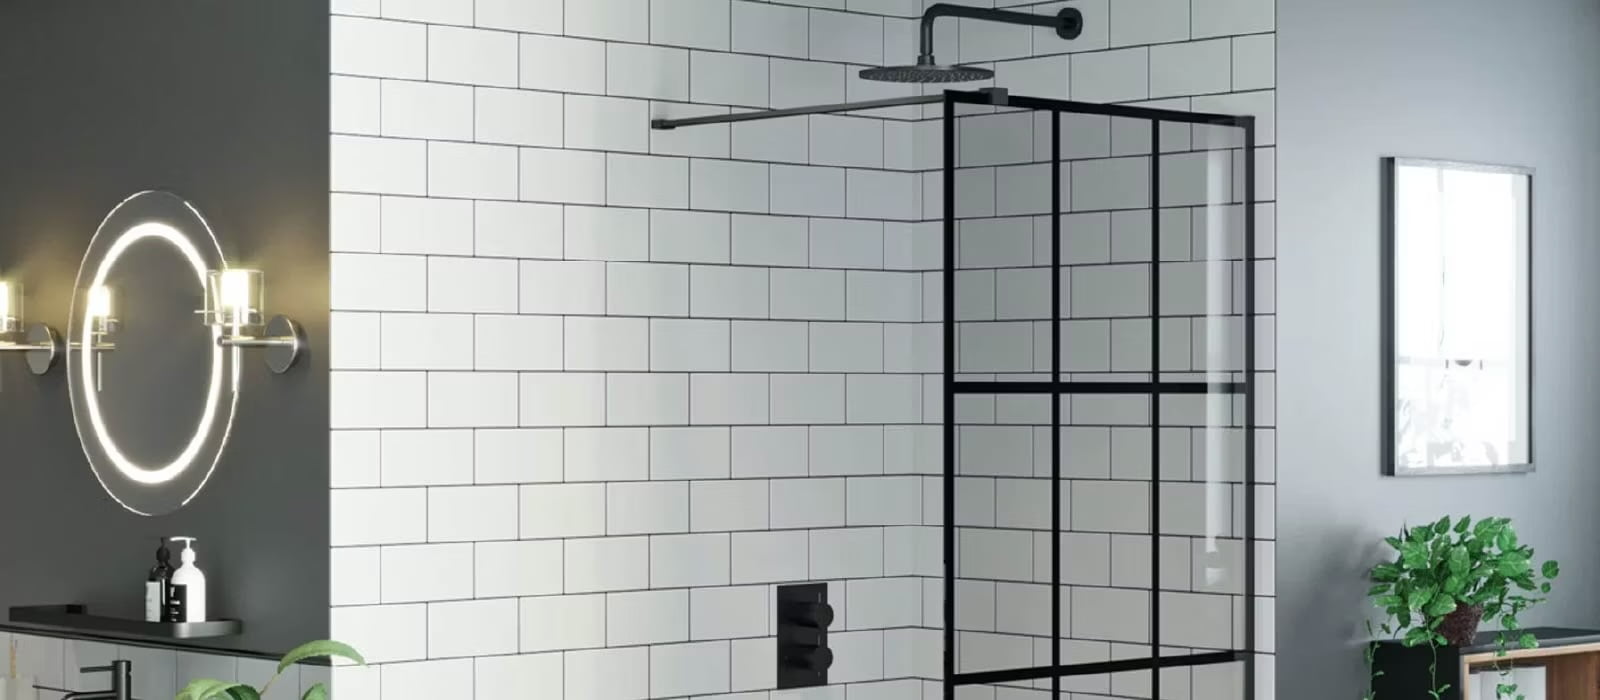 A sleek modern bathroom featuring a walk-in shower with a glass door framed in black